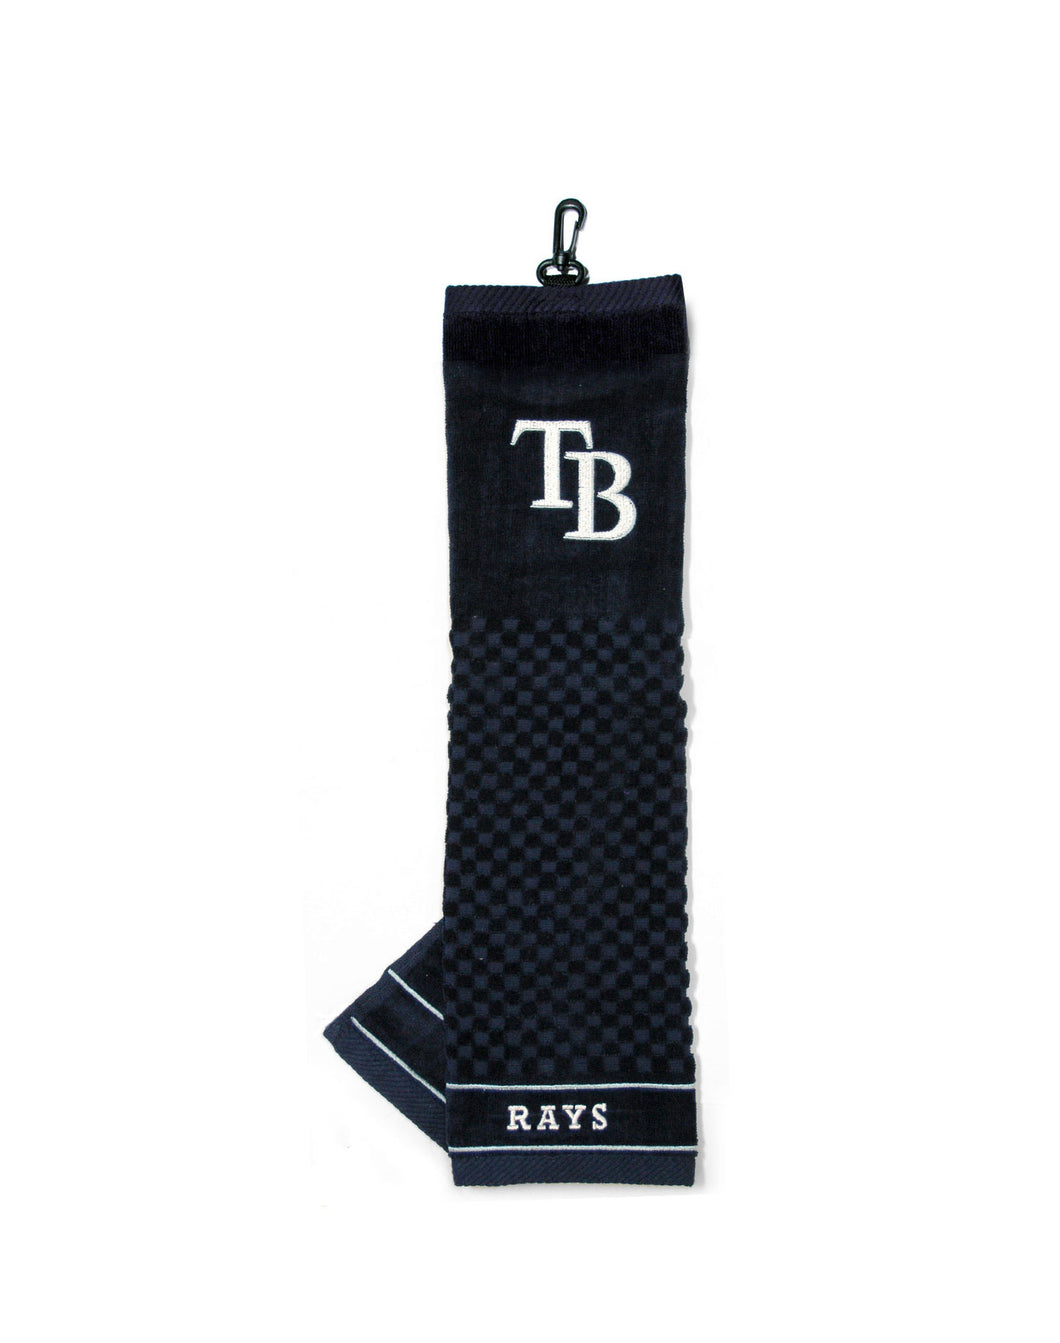 MLB Major League Baseball Official Golf Tri-Fold Towel. Tampa Bay Rays.